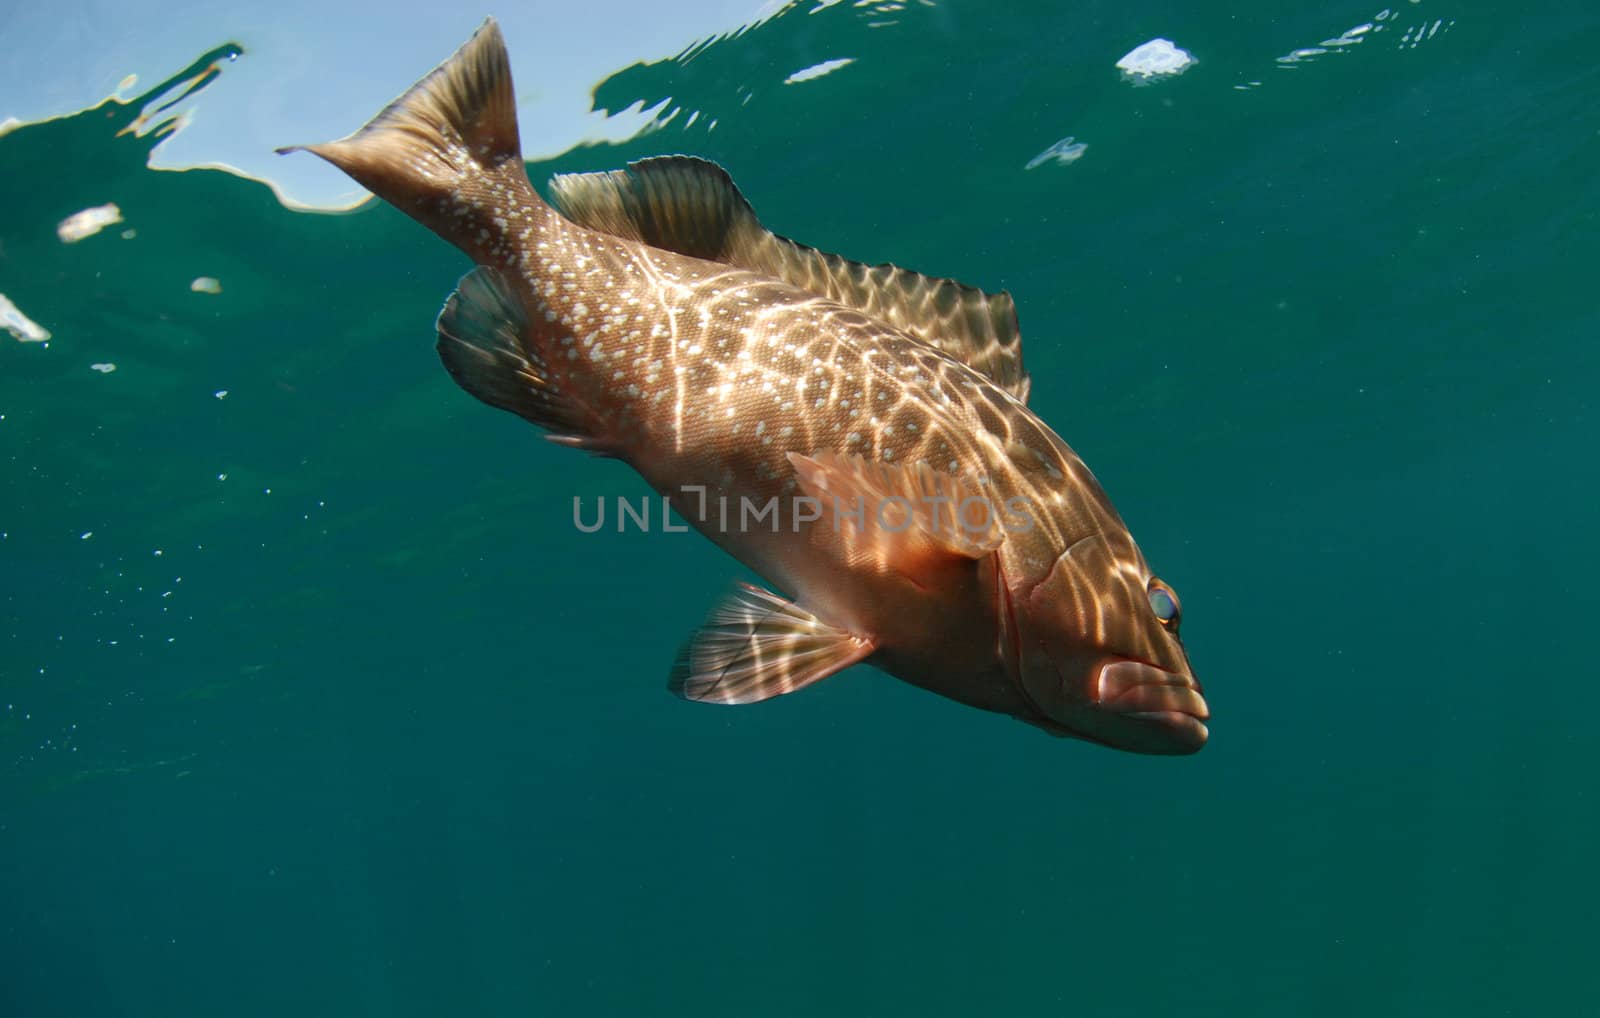 Red grouper fish swimming in ocean by ftlaudgirl